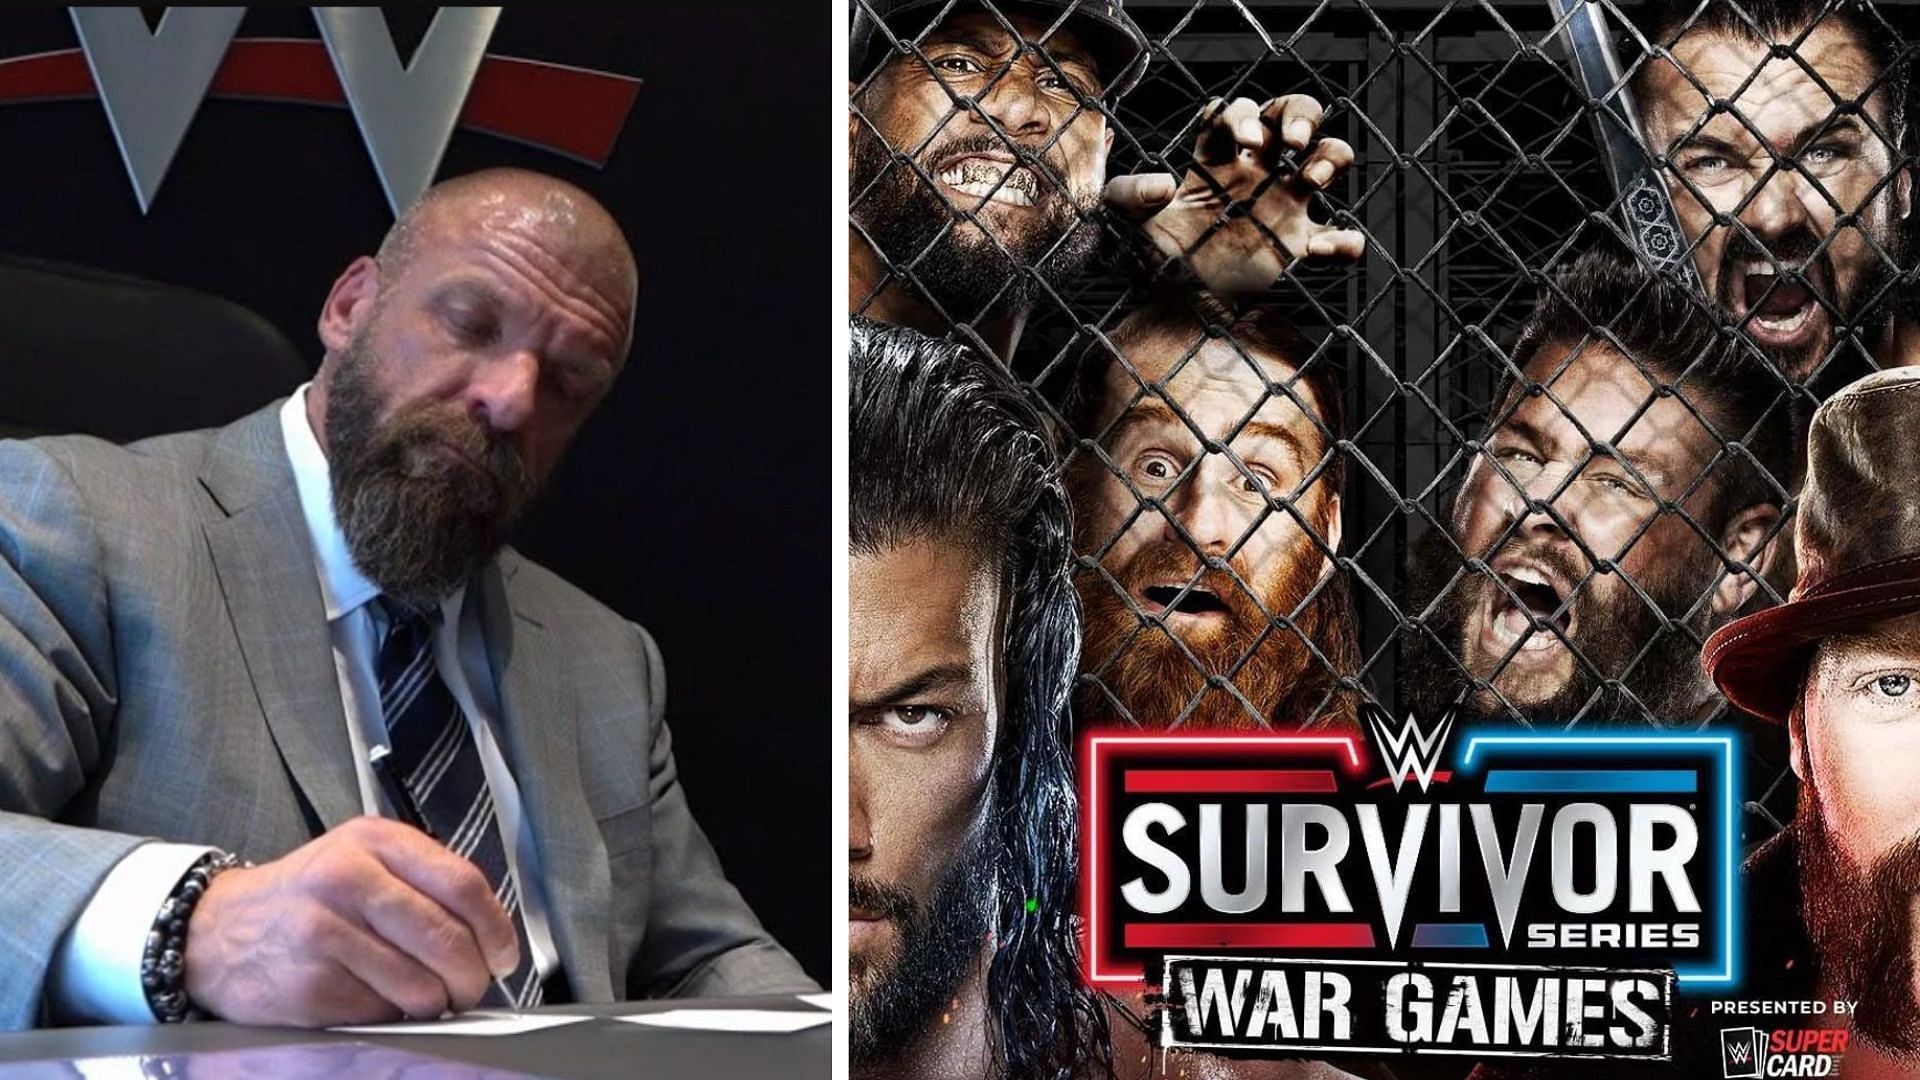 WWE Survivor Series WarGames was reportedly a massive success